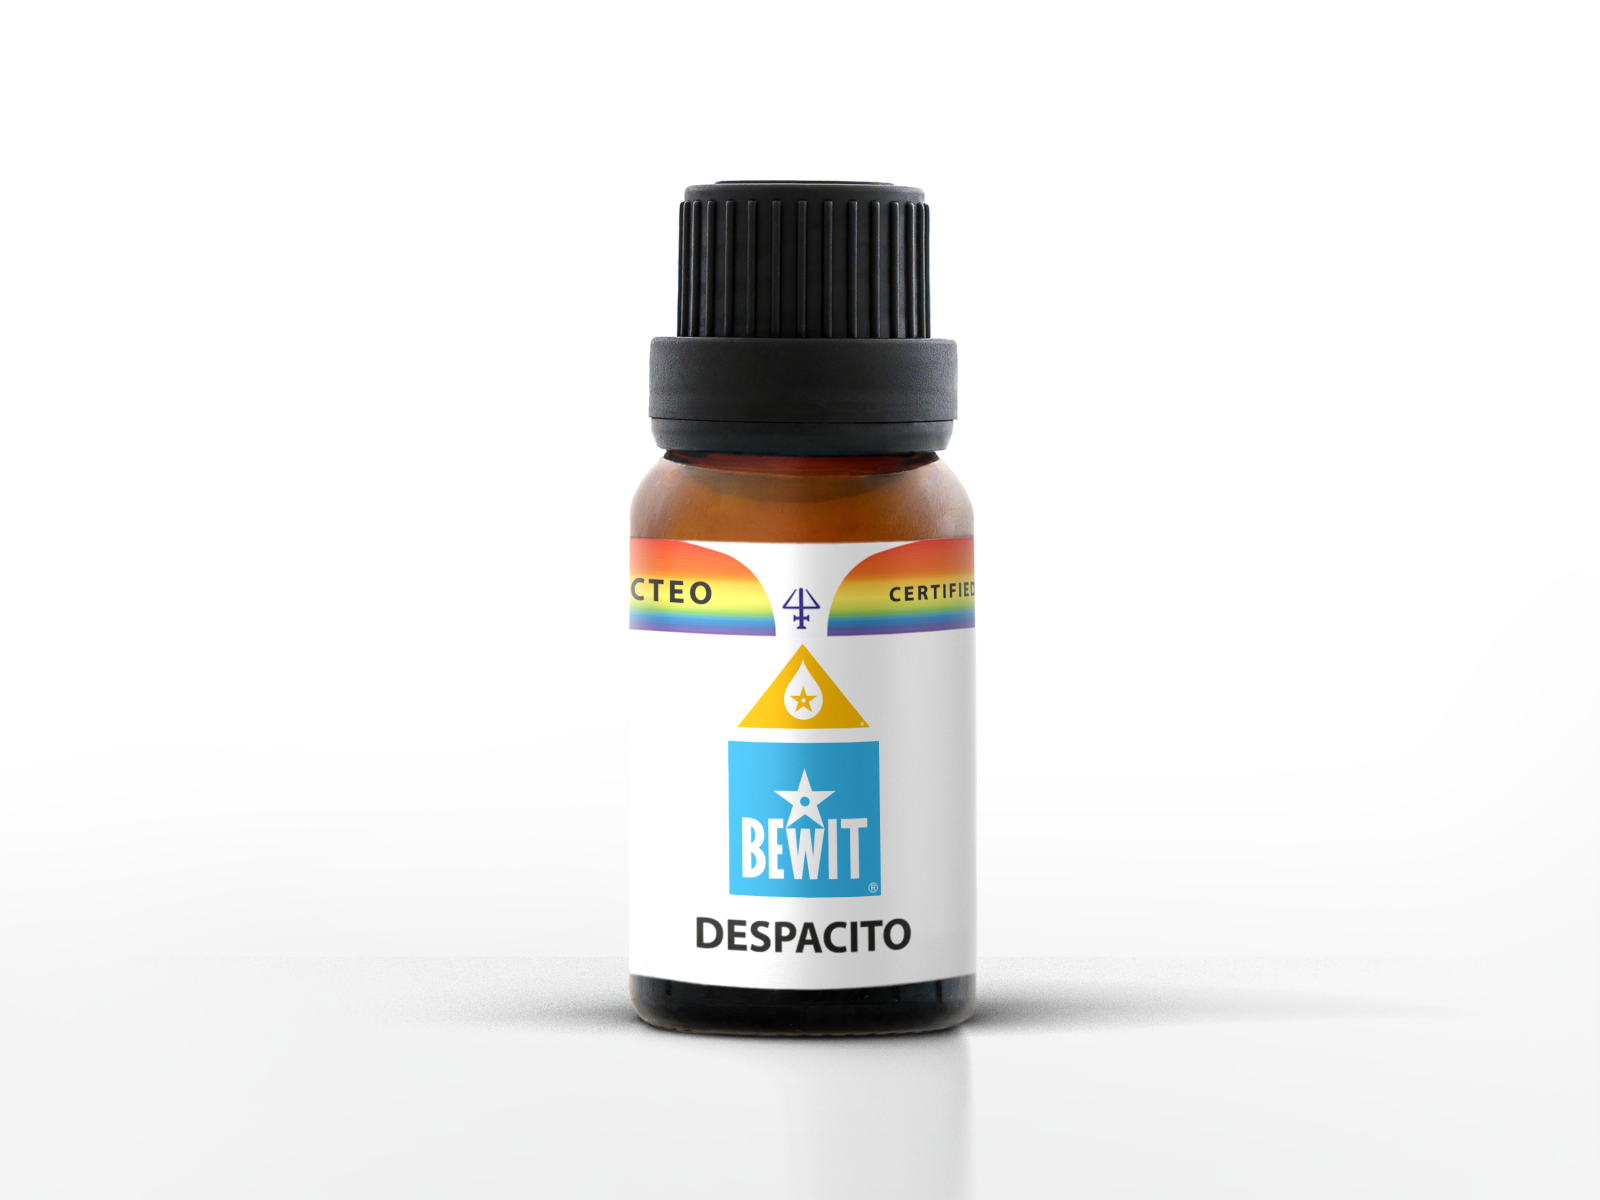 BEWIT DESPACITO - Blend of essential oils